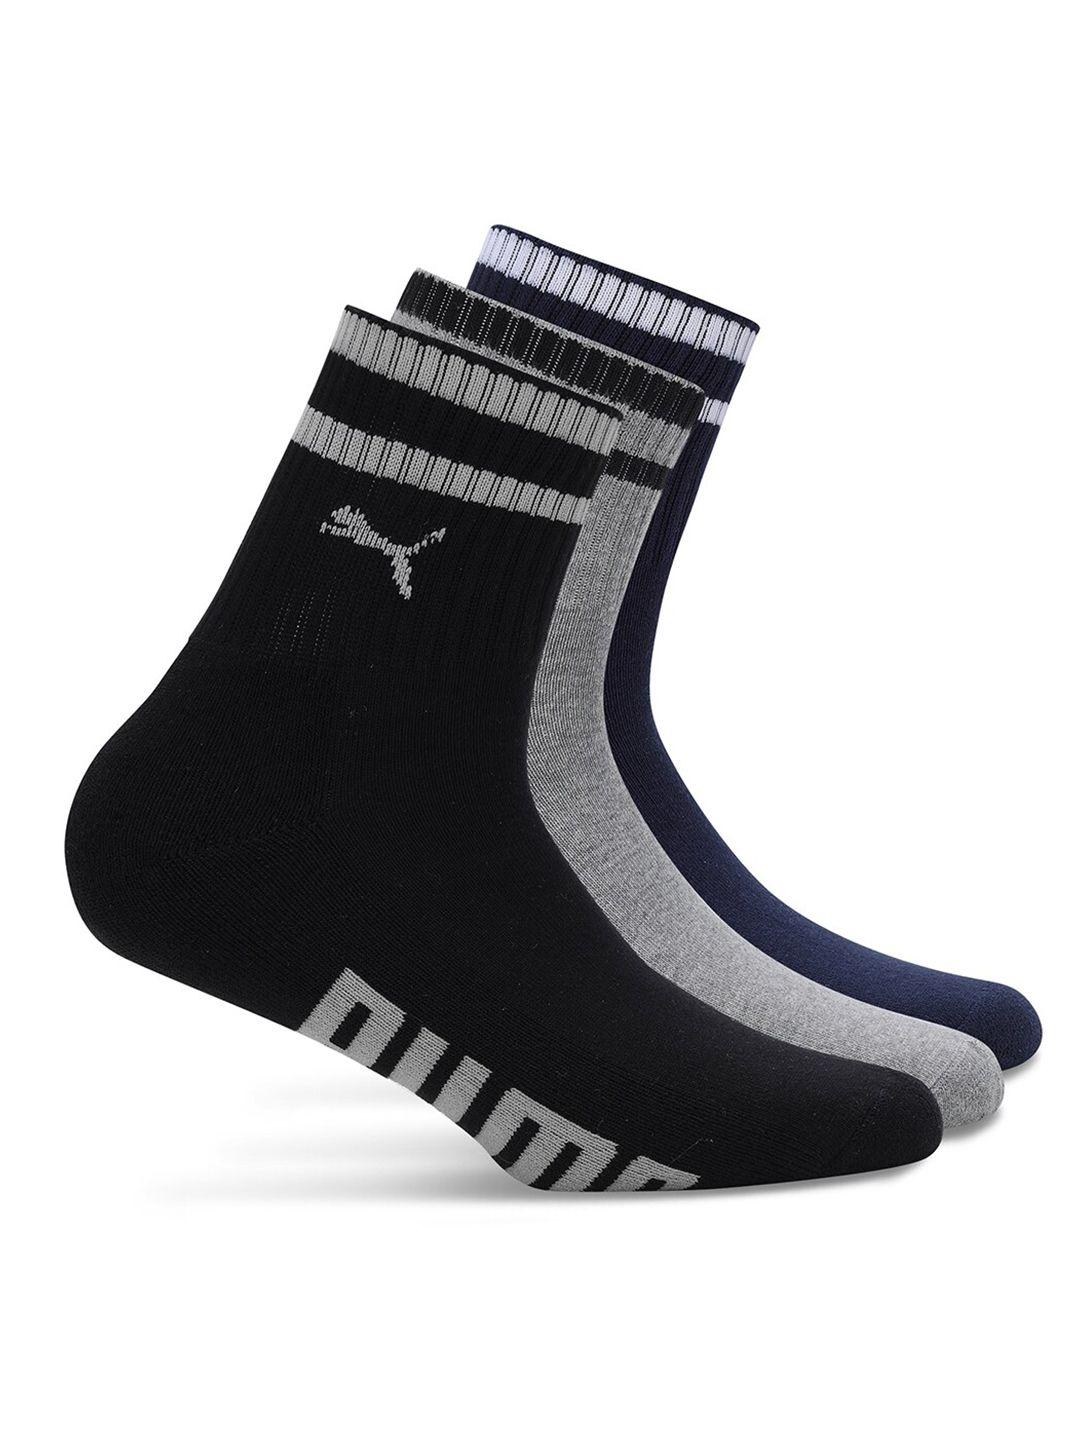 puma-unisex-pack-of-3-cotton-ankle-length-socks